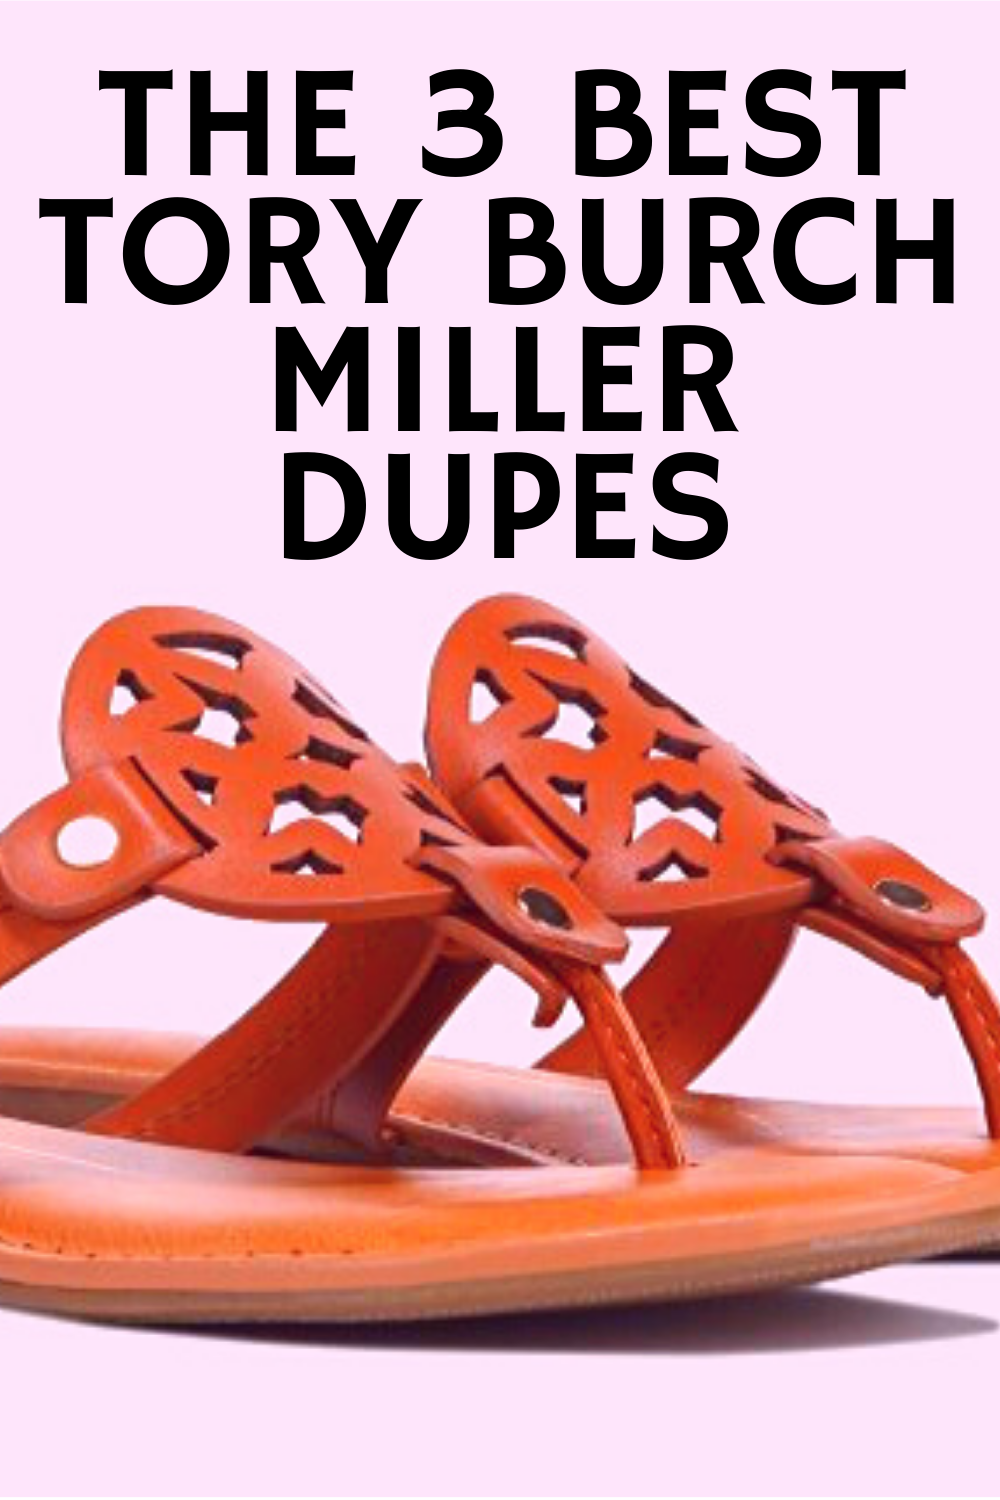 orange tory burch miller sandals